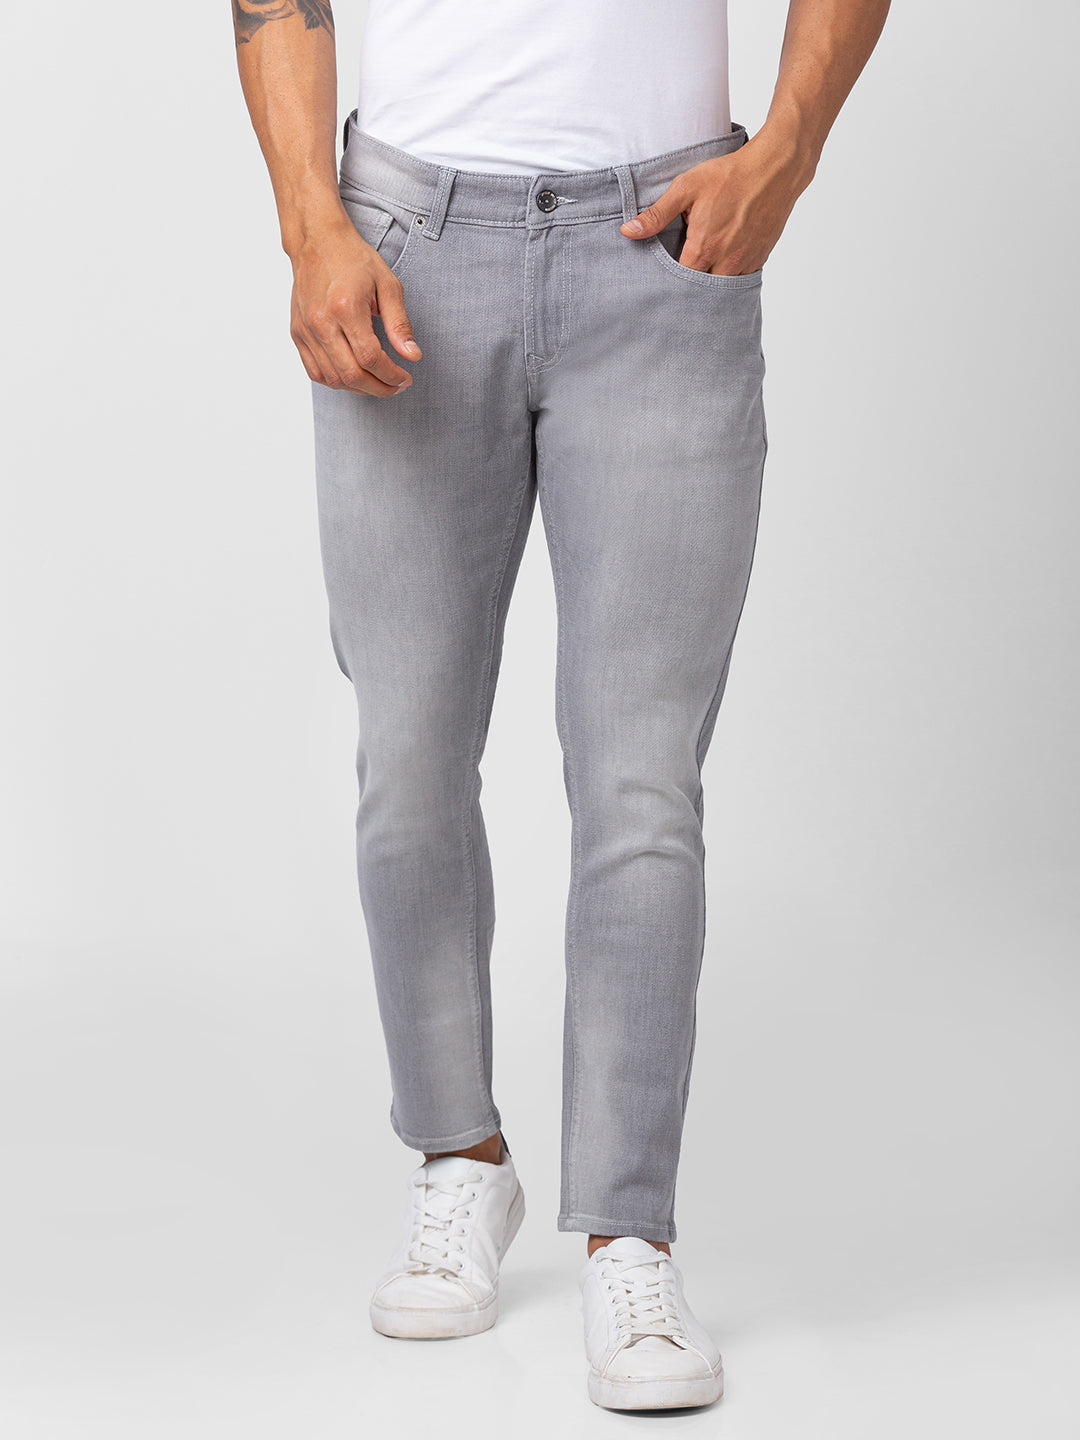 Buy Parx Grey Skinny Fit Distressed Jeans for Mens Online @ Tata CLiQ